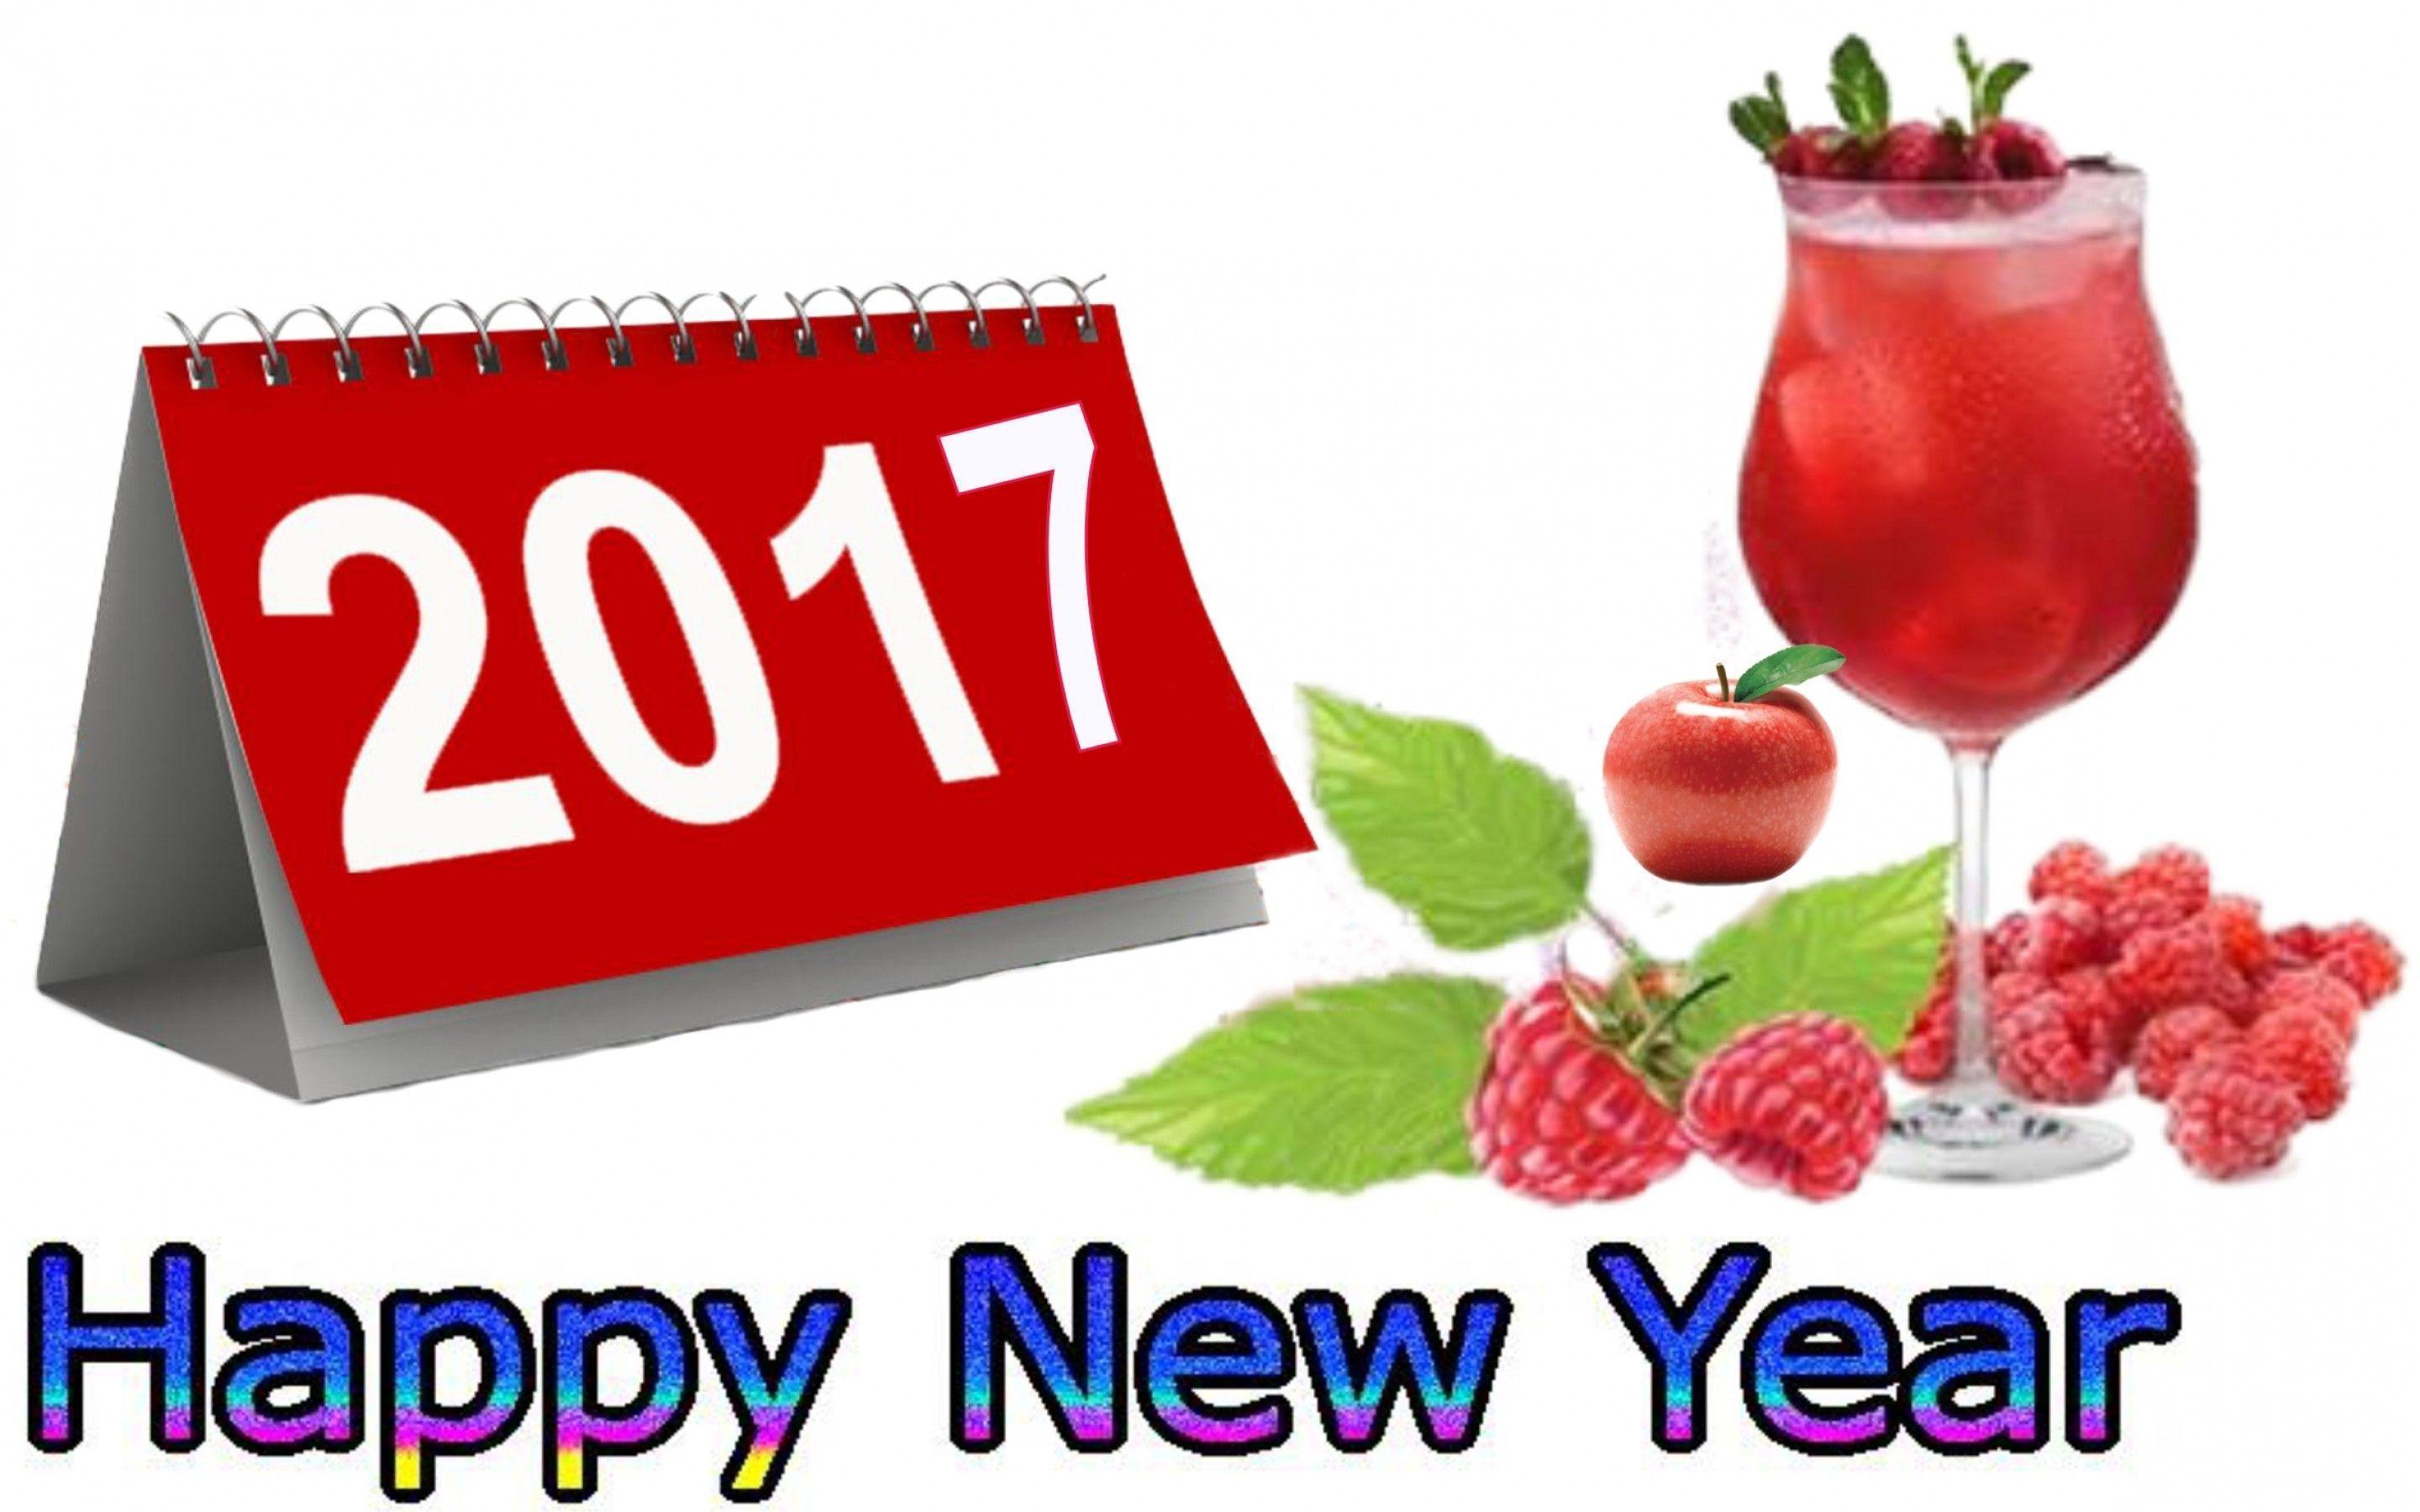 Happy New Year Wallpaper 2017 New Year 2017. Happy New